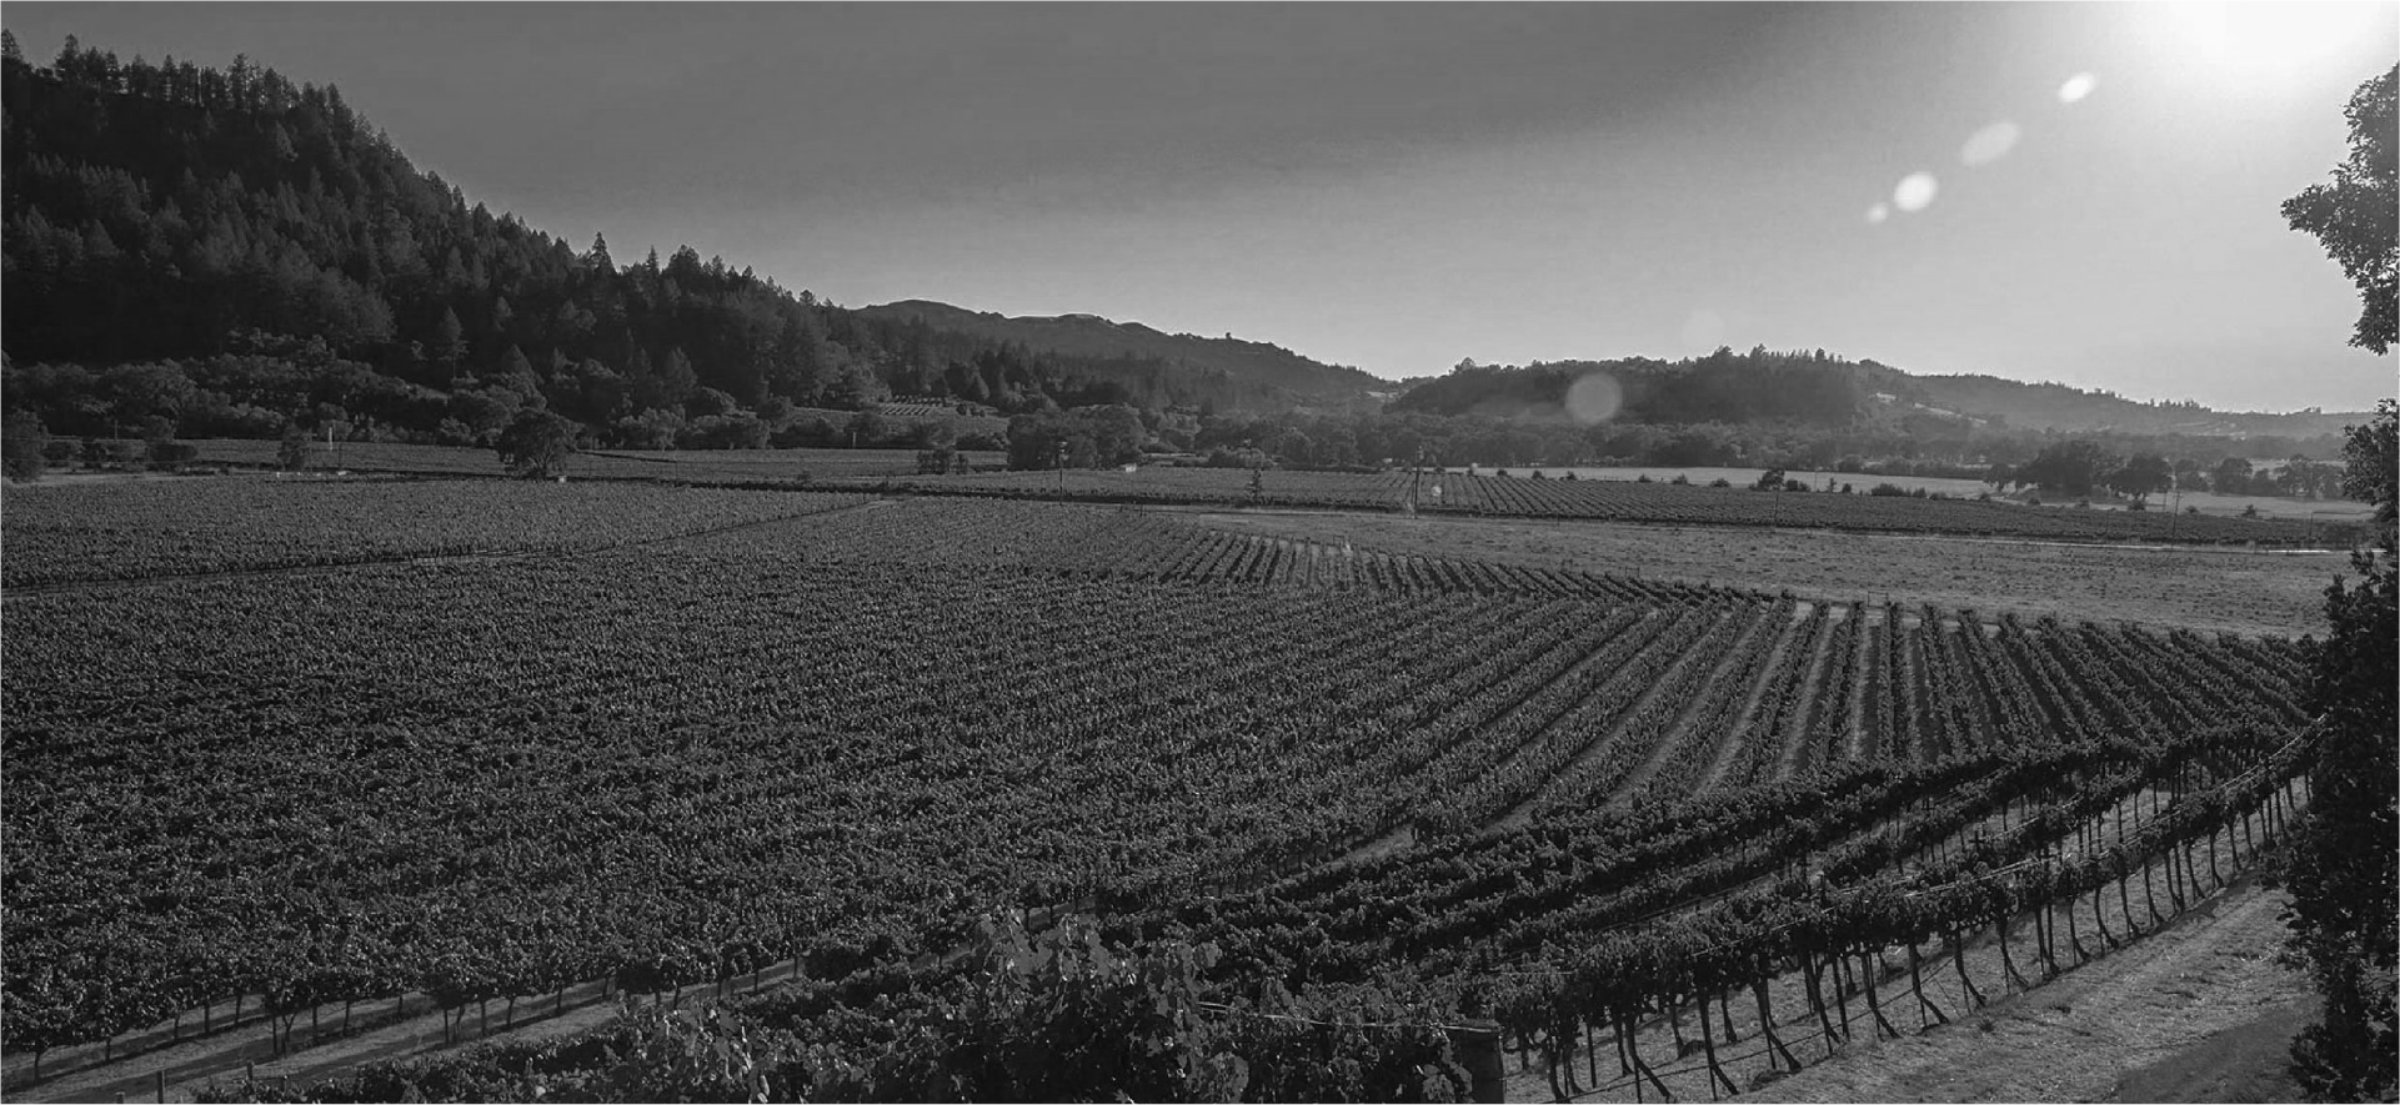 Black and white photo of vineyards